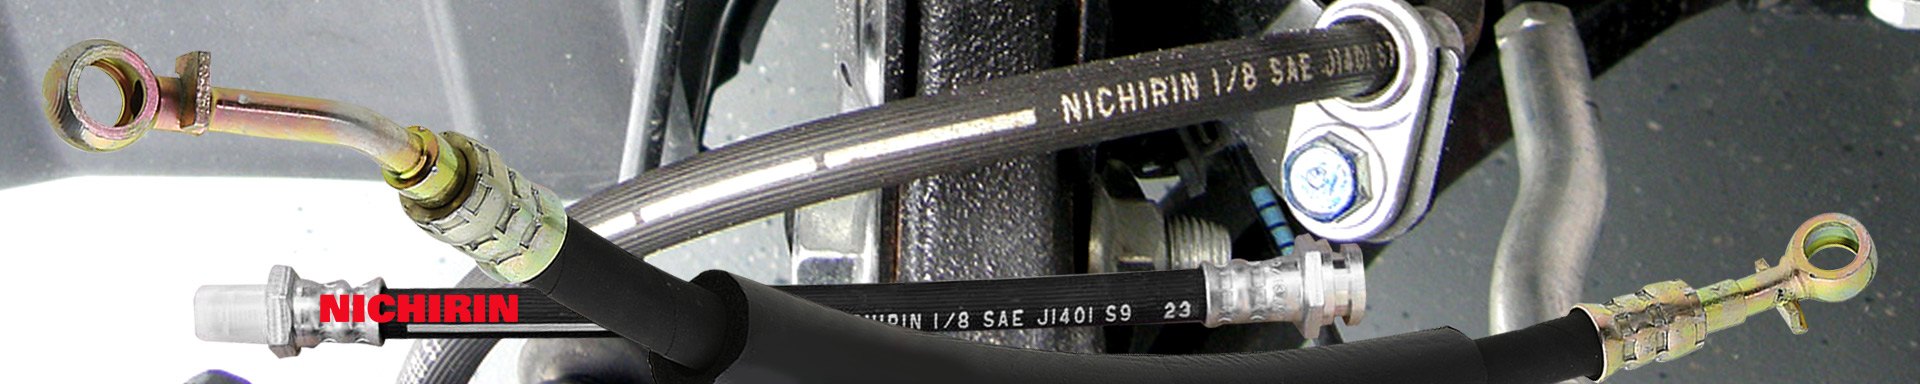 Nichirin A/C & Heating